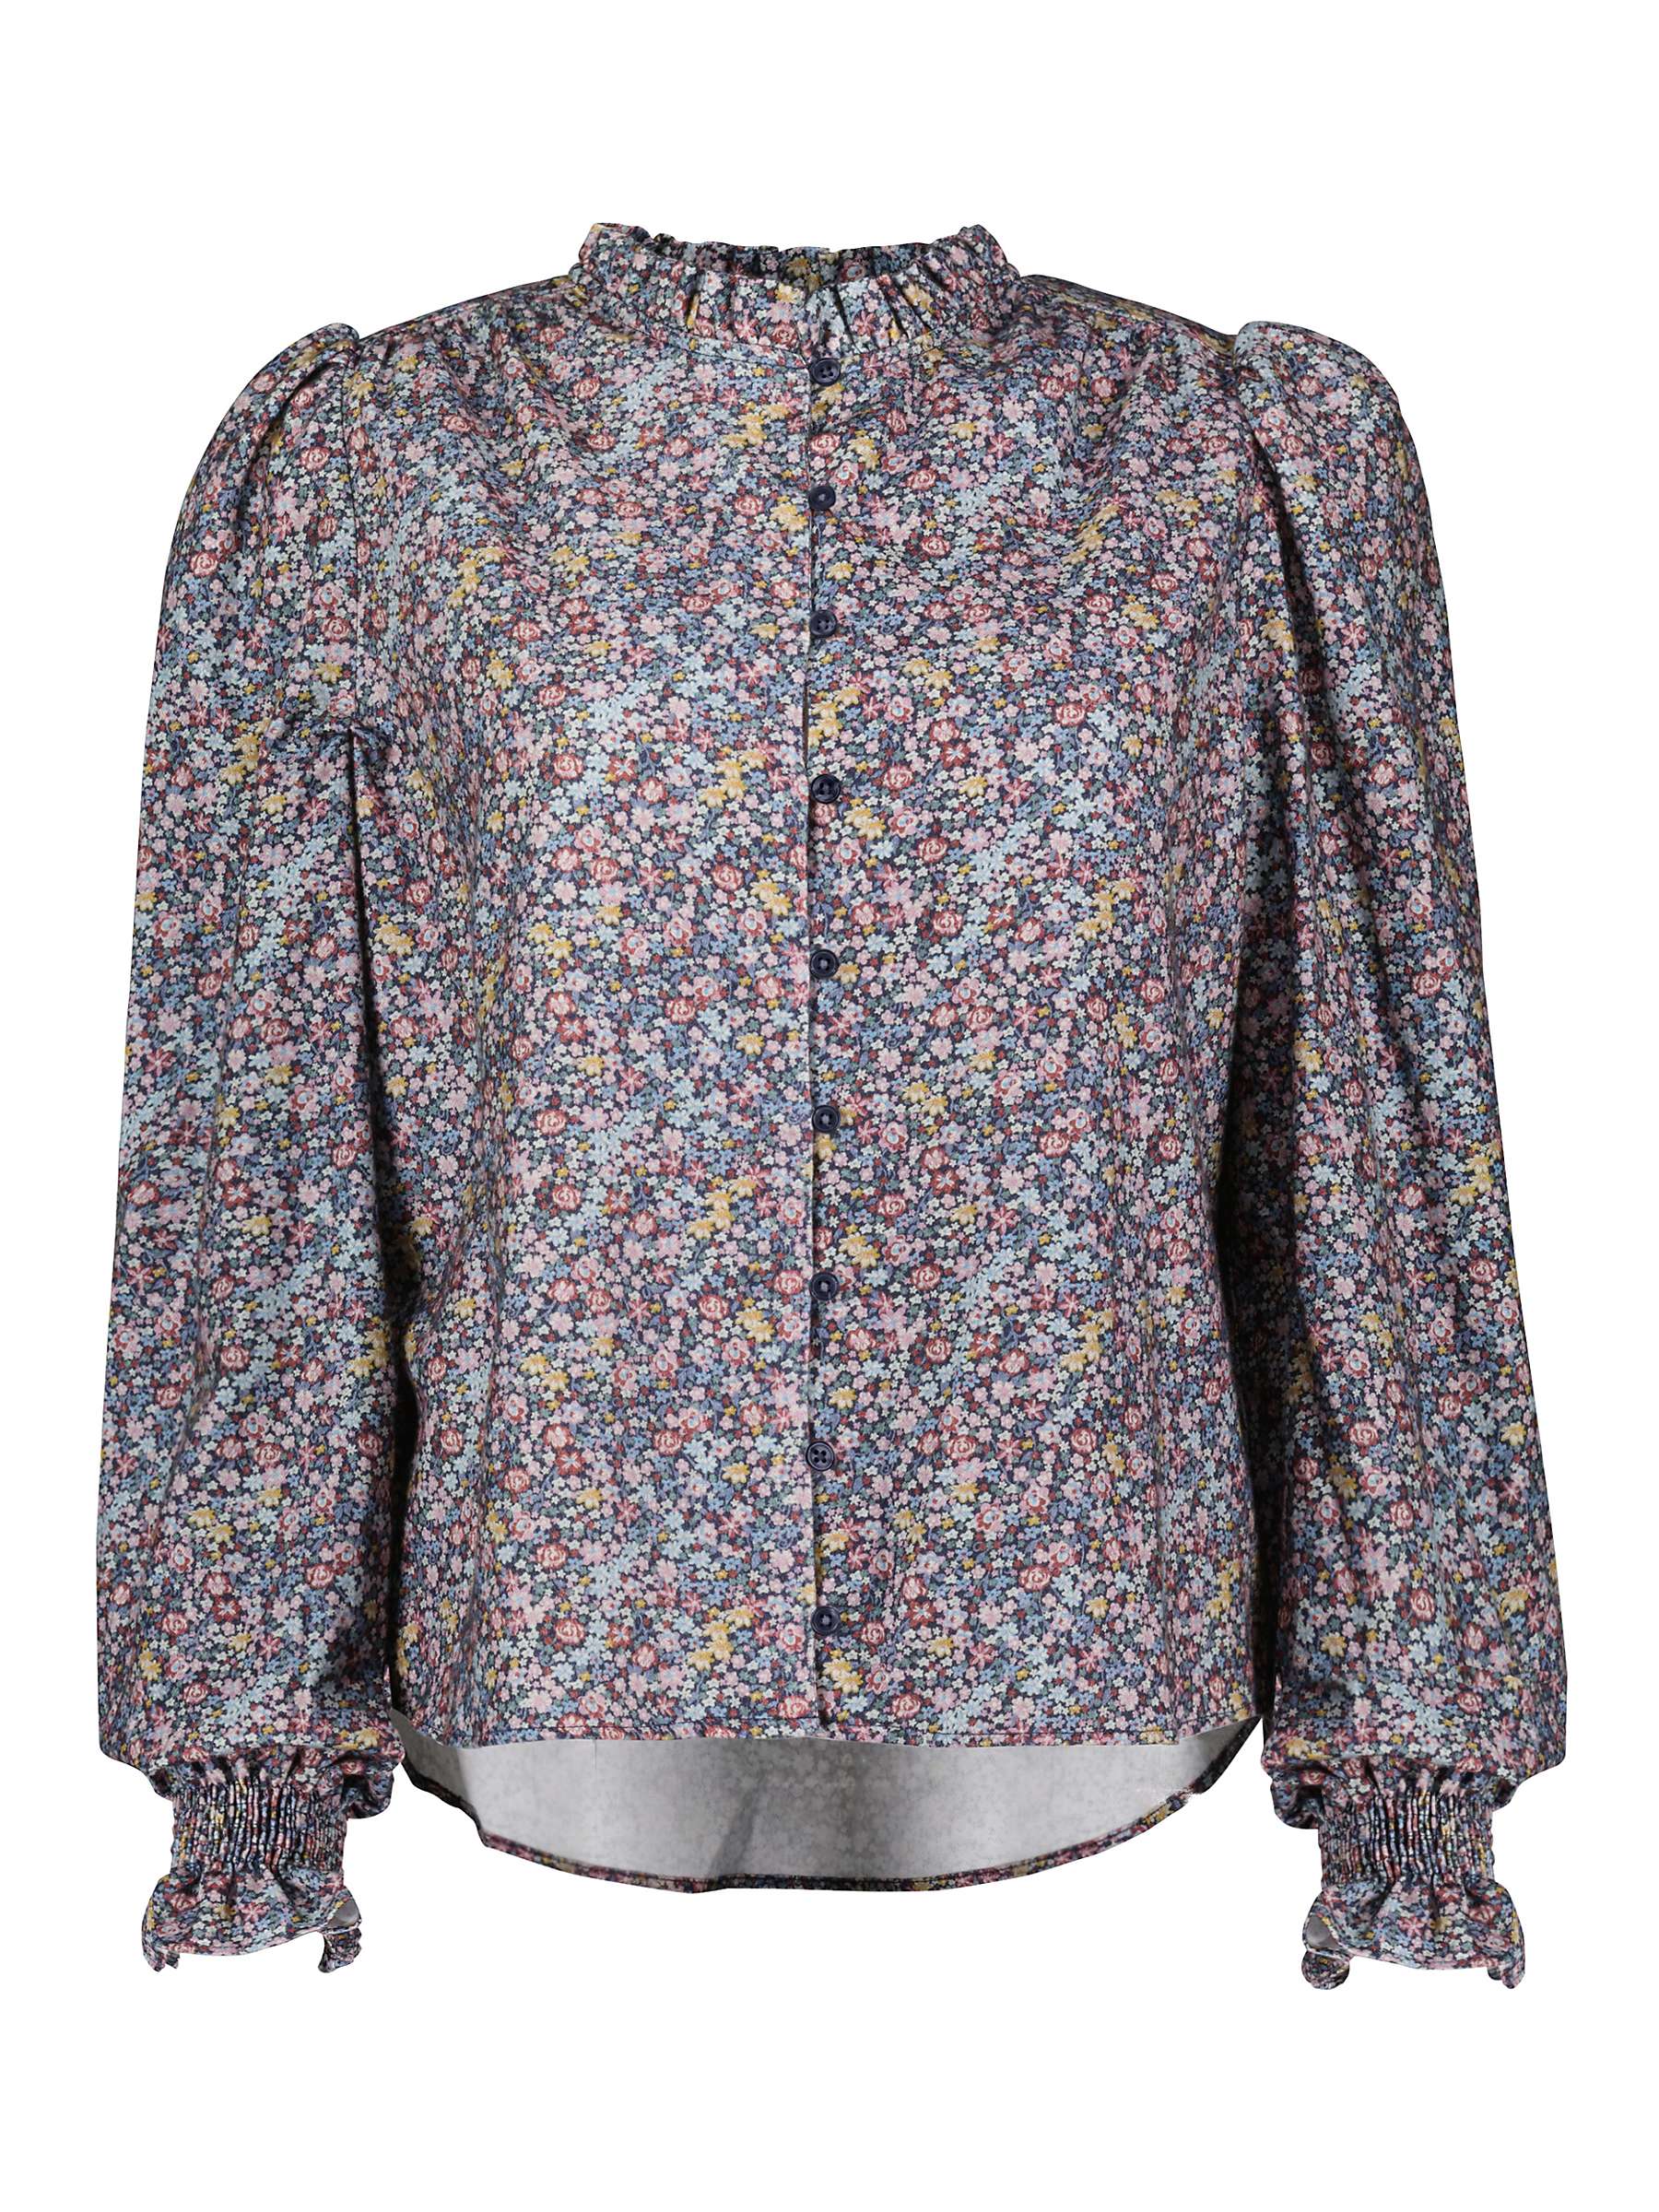 Buy Baukjen Catalina Organic Cotton Ditsy Floral Shirt, Navy Online at johnlewis.com